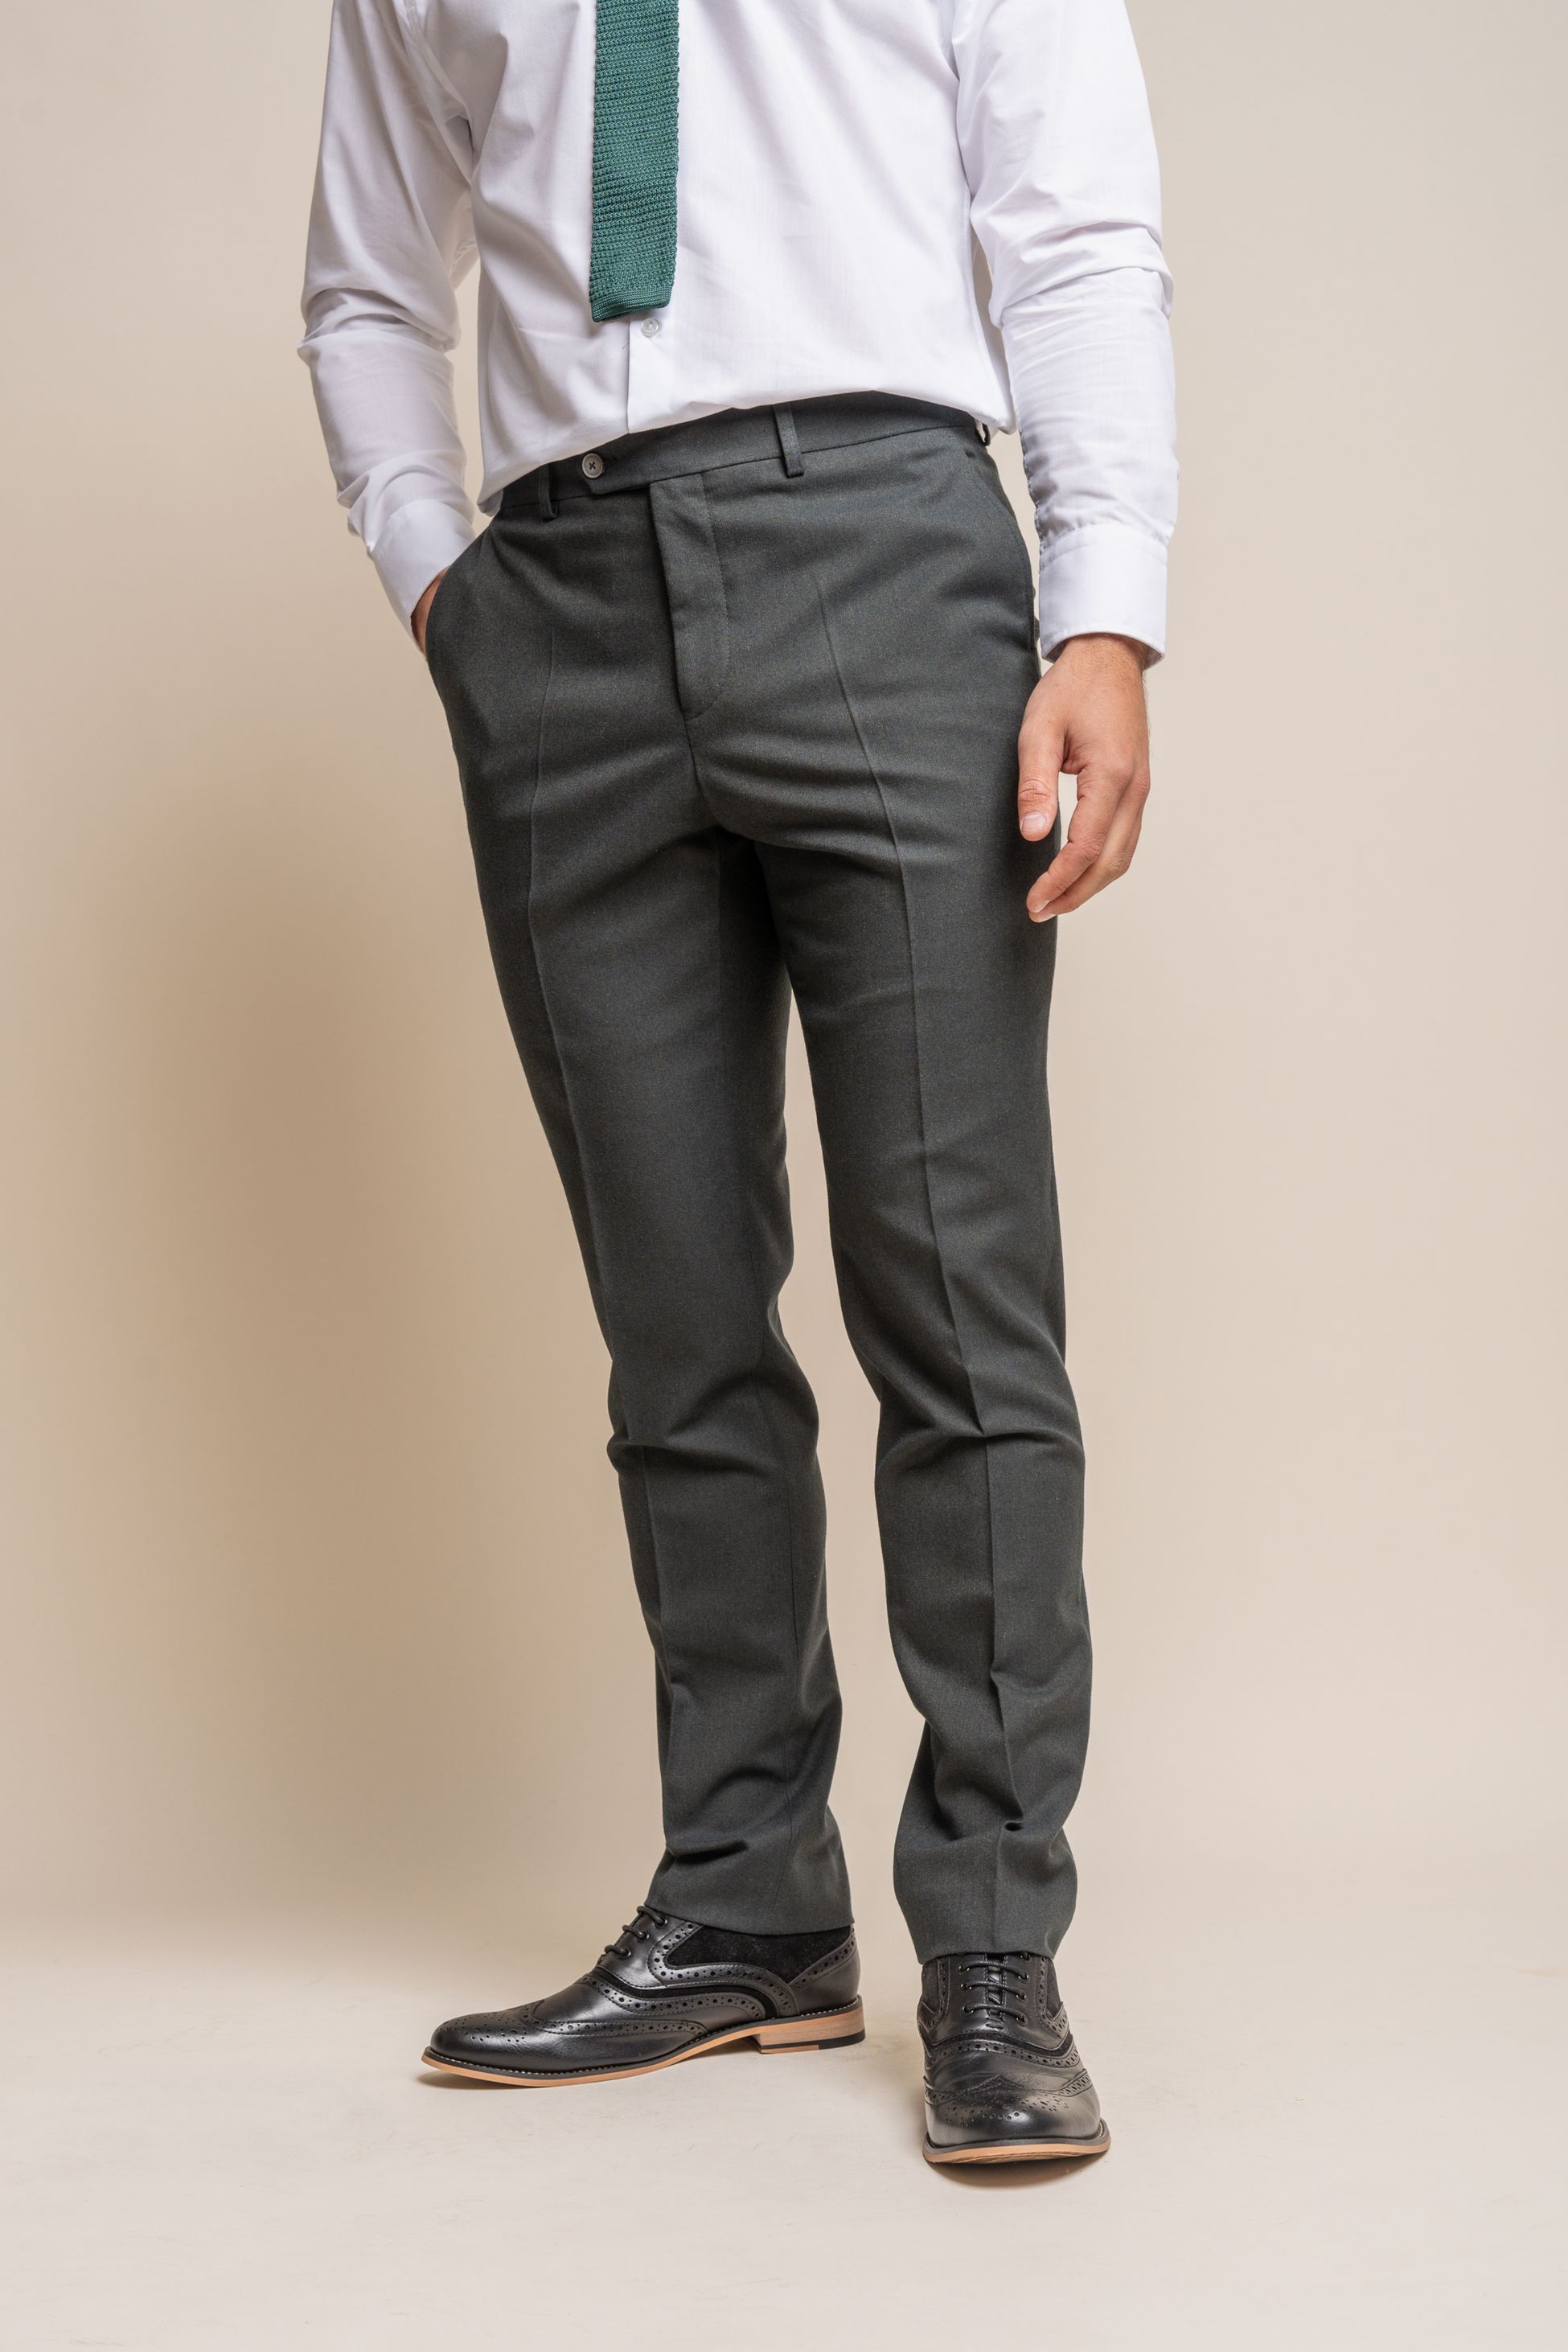 Men's Slim Fit Formal Pants - FURIOUS Olive